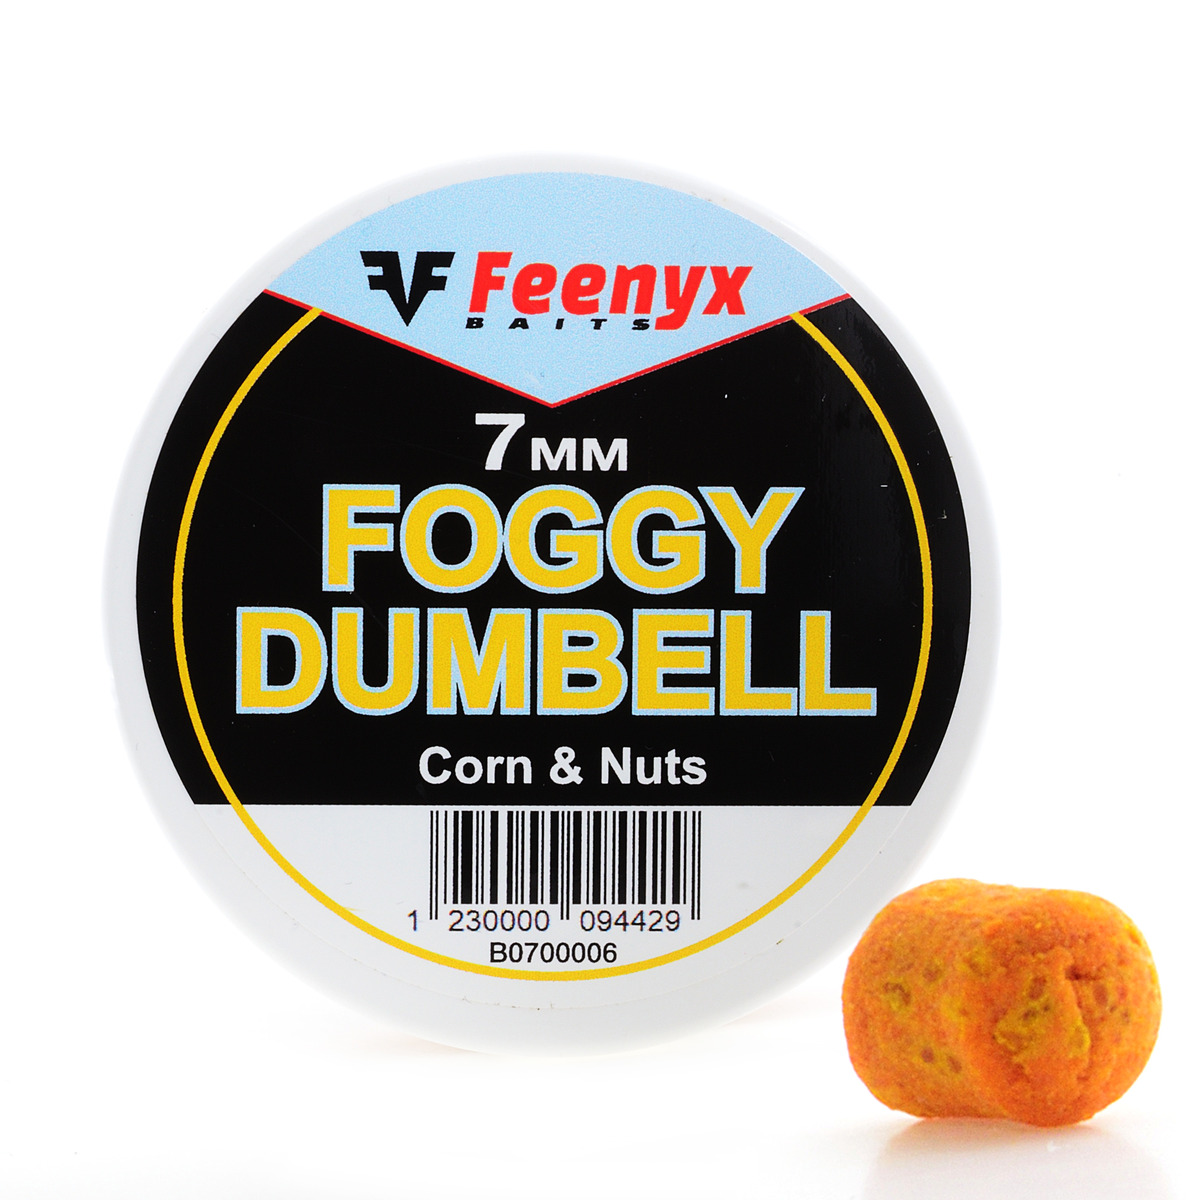 Feenyx Foggy Dumbell Corn & Nuts - 7 mm